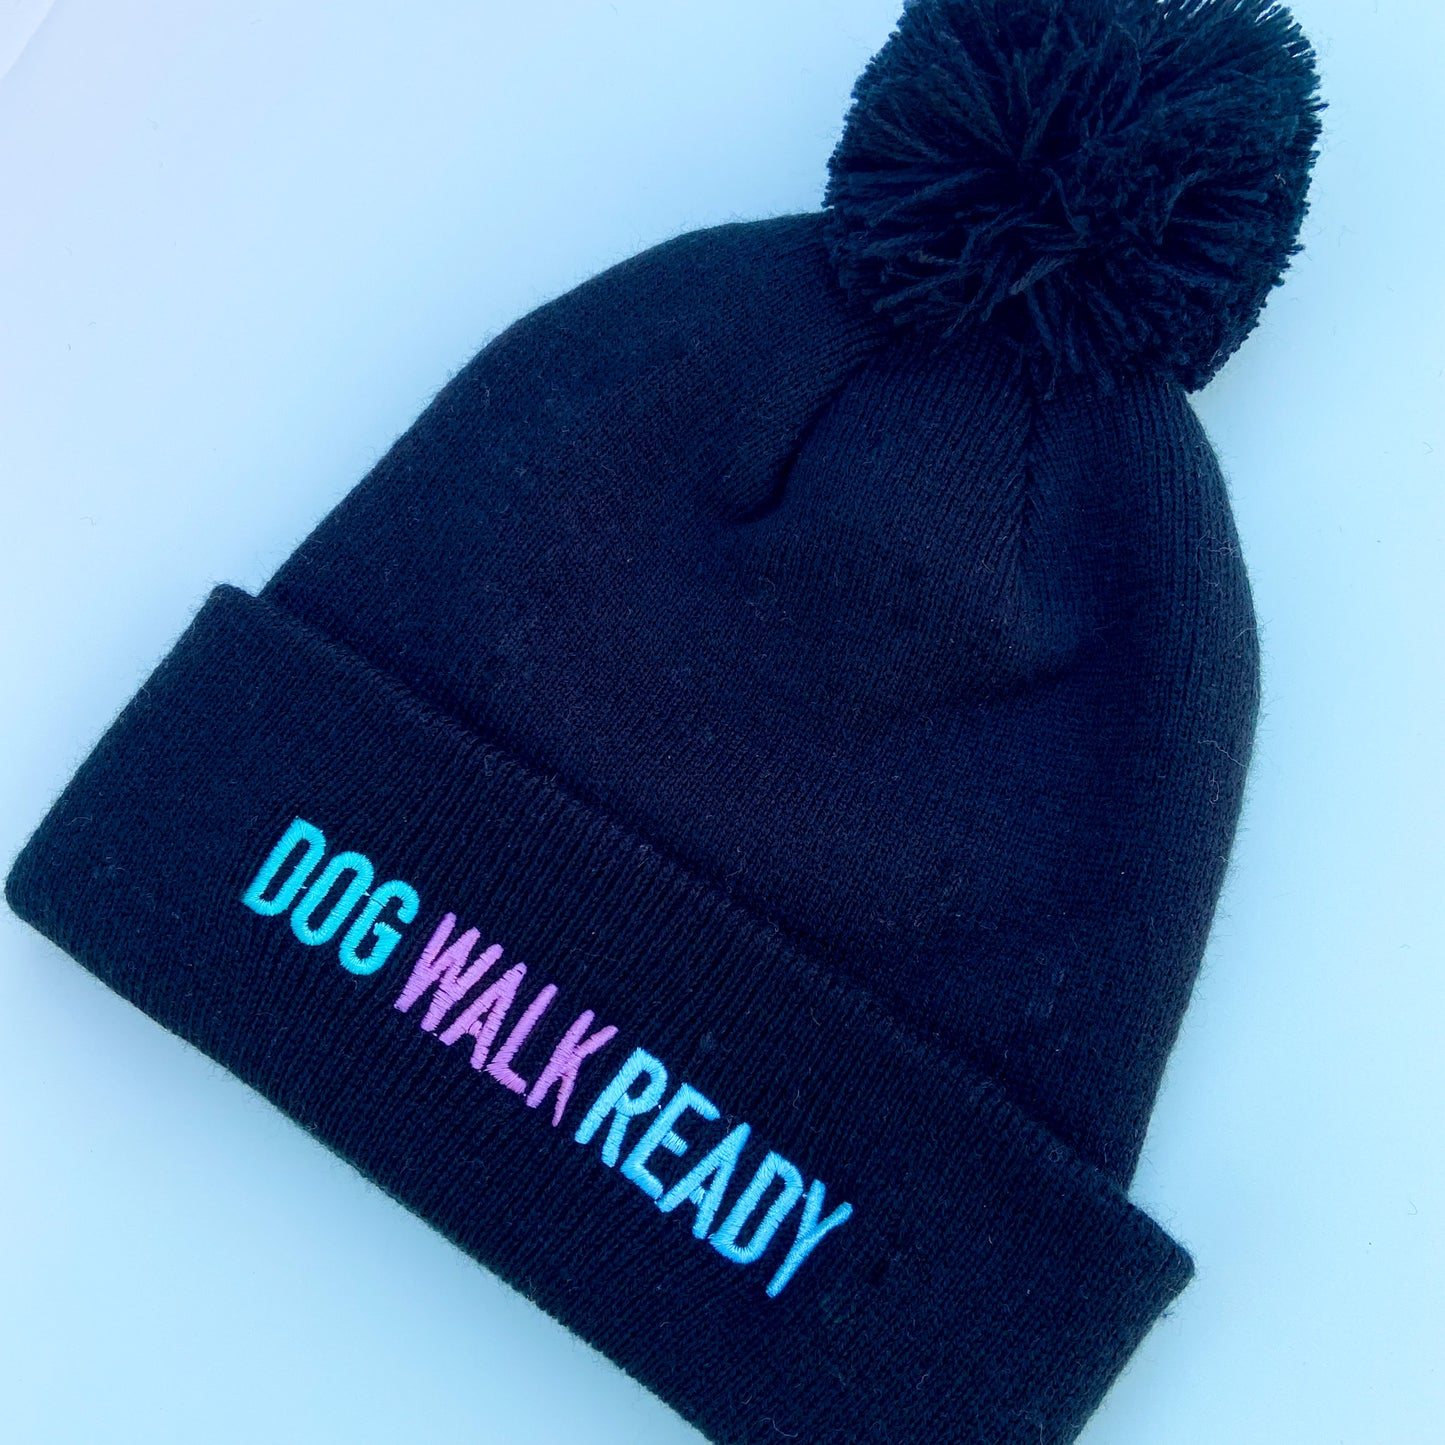 Dog Walk Ready Embroidered Black Beanie Hat